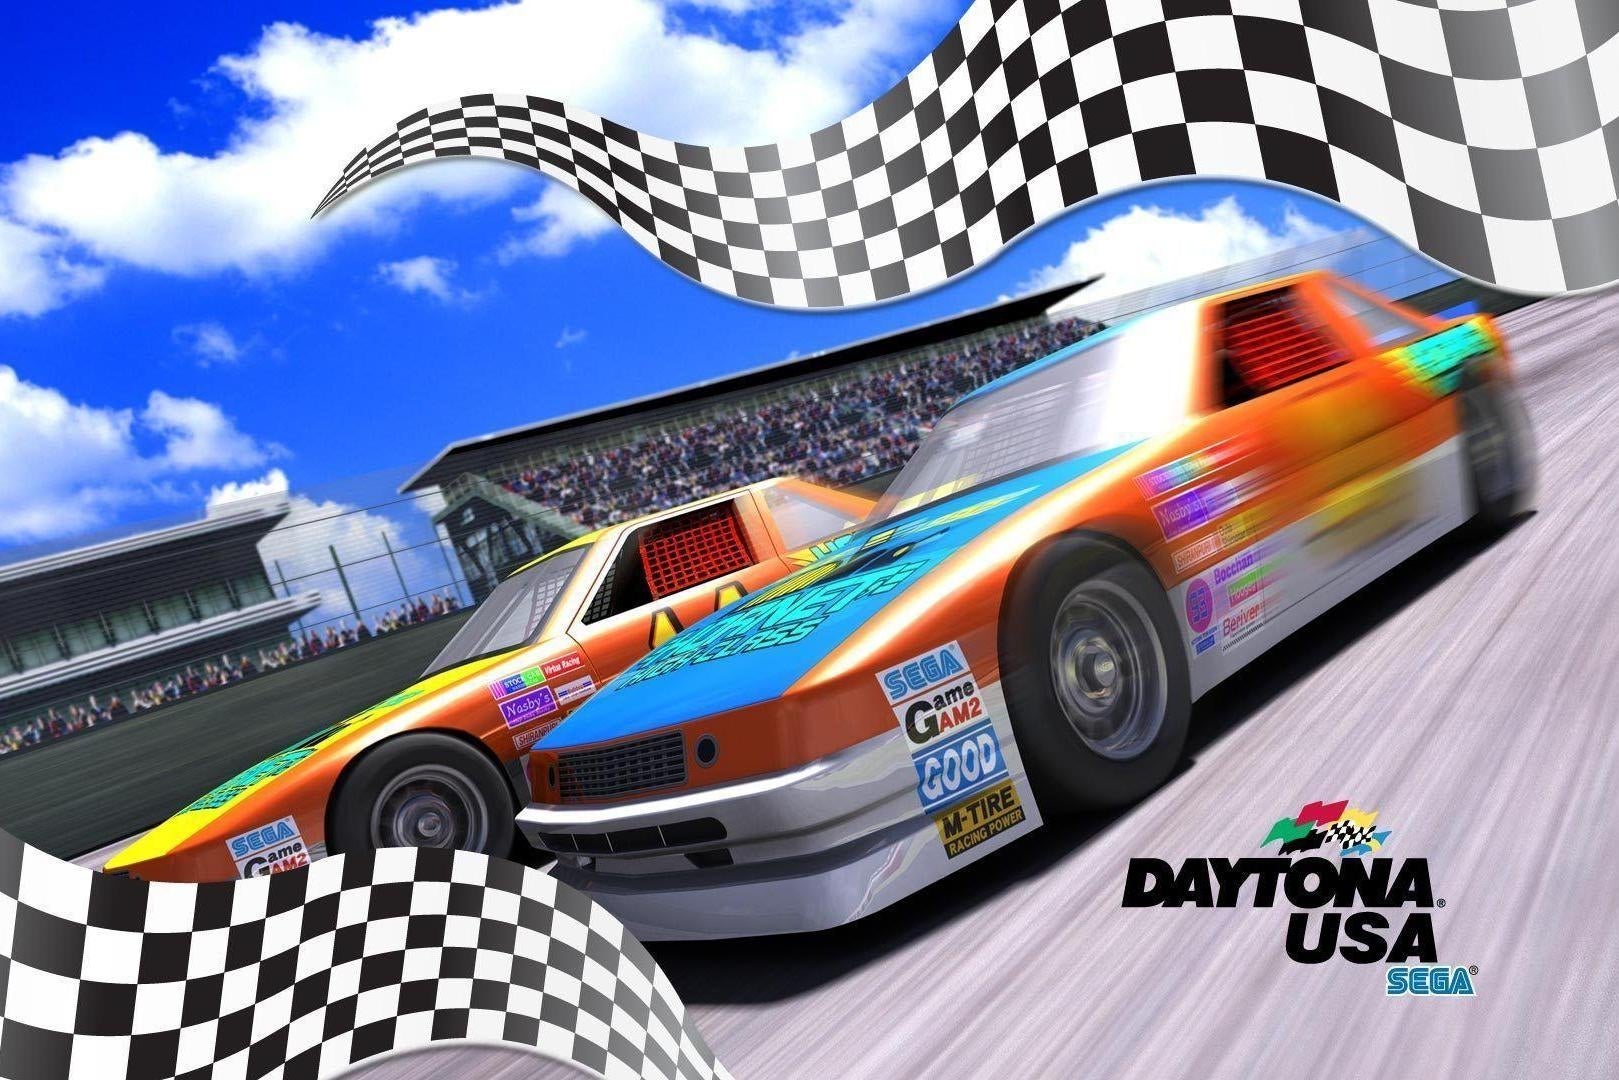 Imagem para SEGA anuncia a arcade Daytona 3 Championship USA